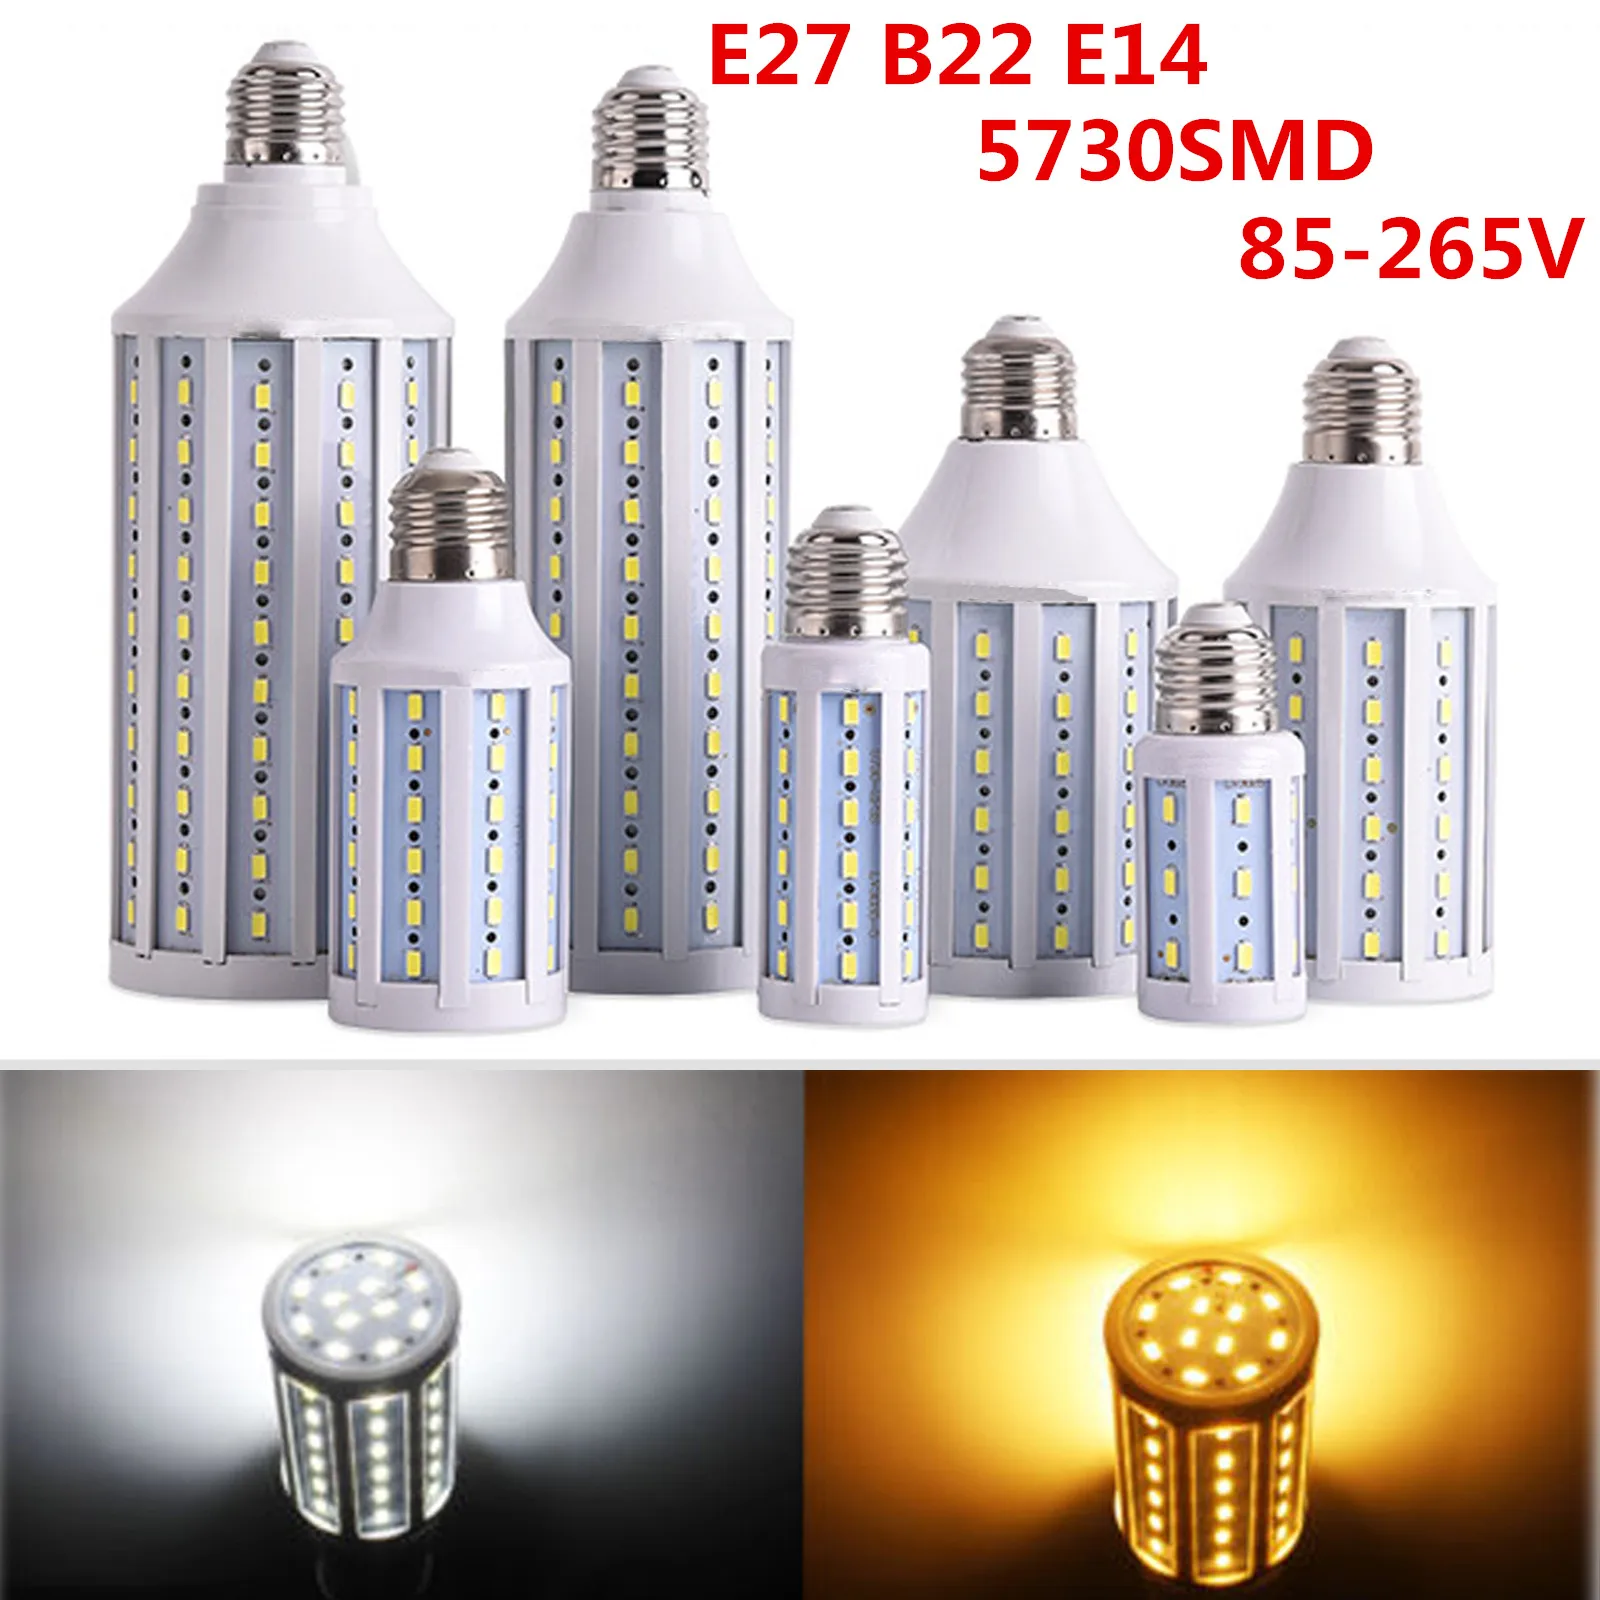 

E27 B22 E14 85-265V 5730 SMD LED Corn Linght Bulb Cool/Warm White Indoor Energy-Saving 5-50W Highlight Lamp Bulbs